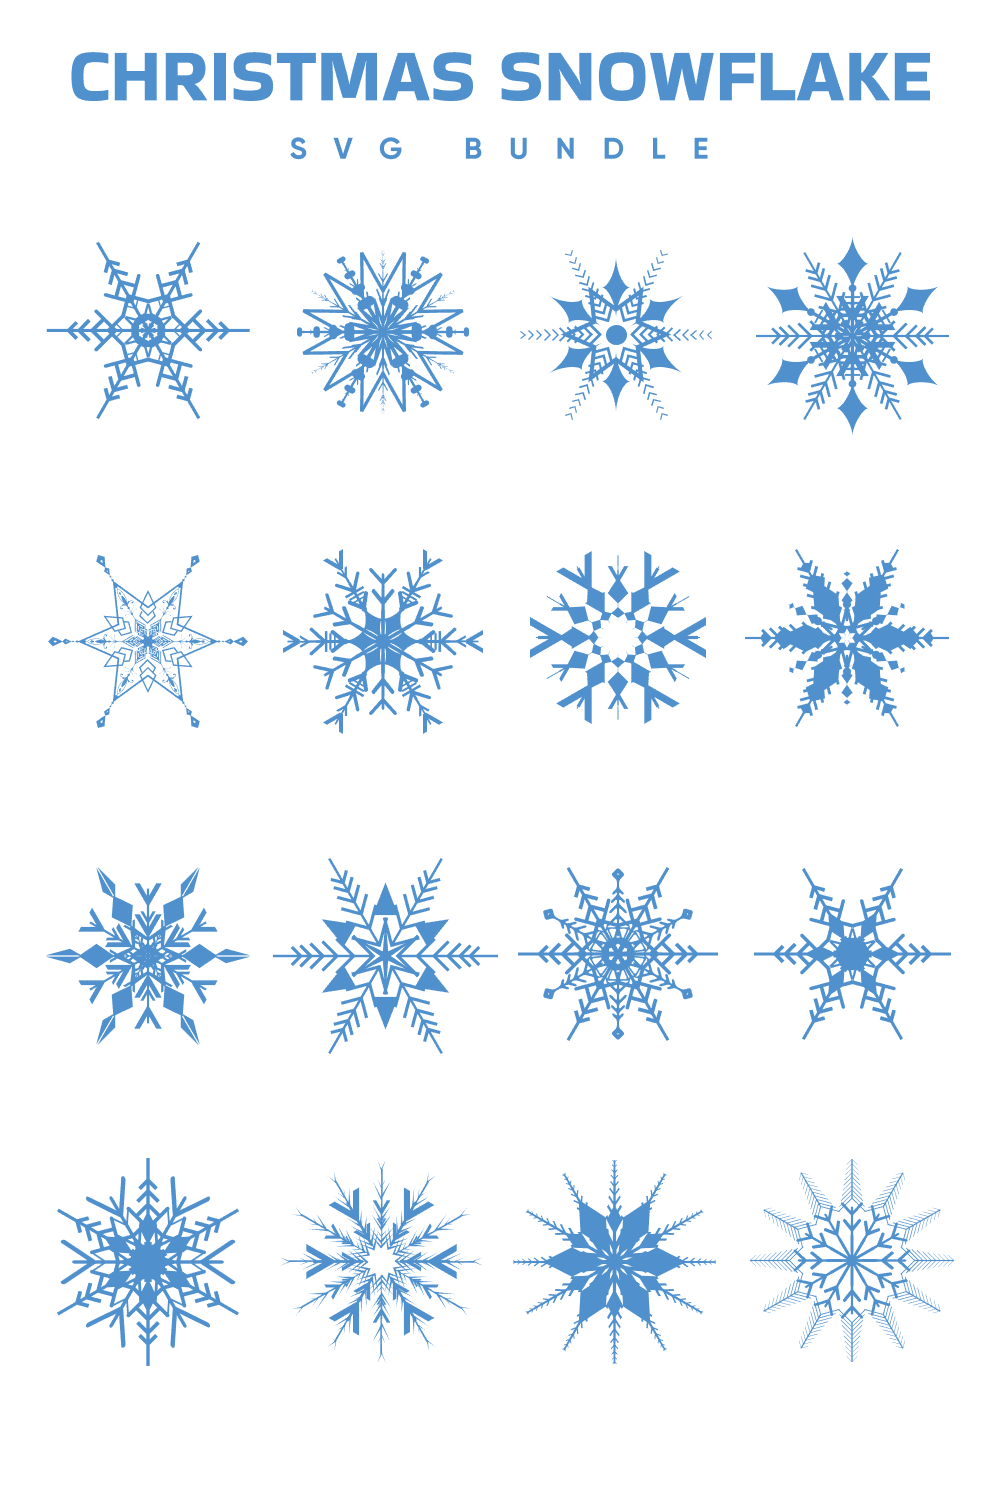 Christmas Snowflake SVG - pinterest image preview.